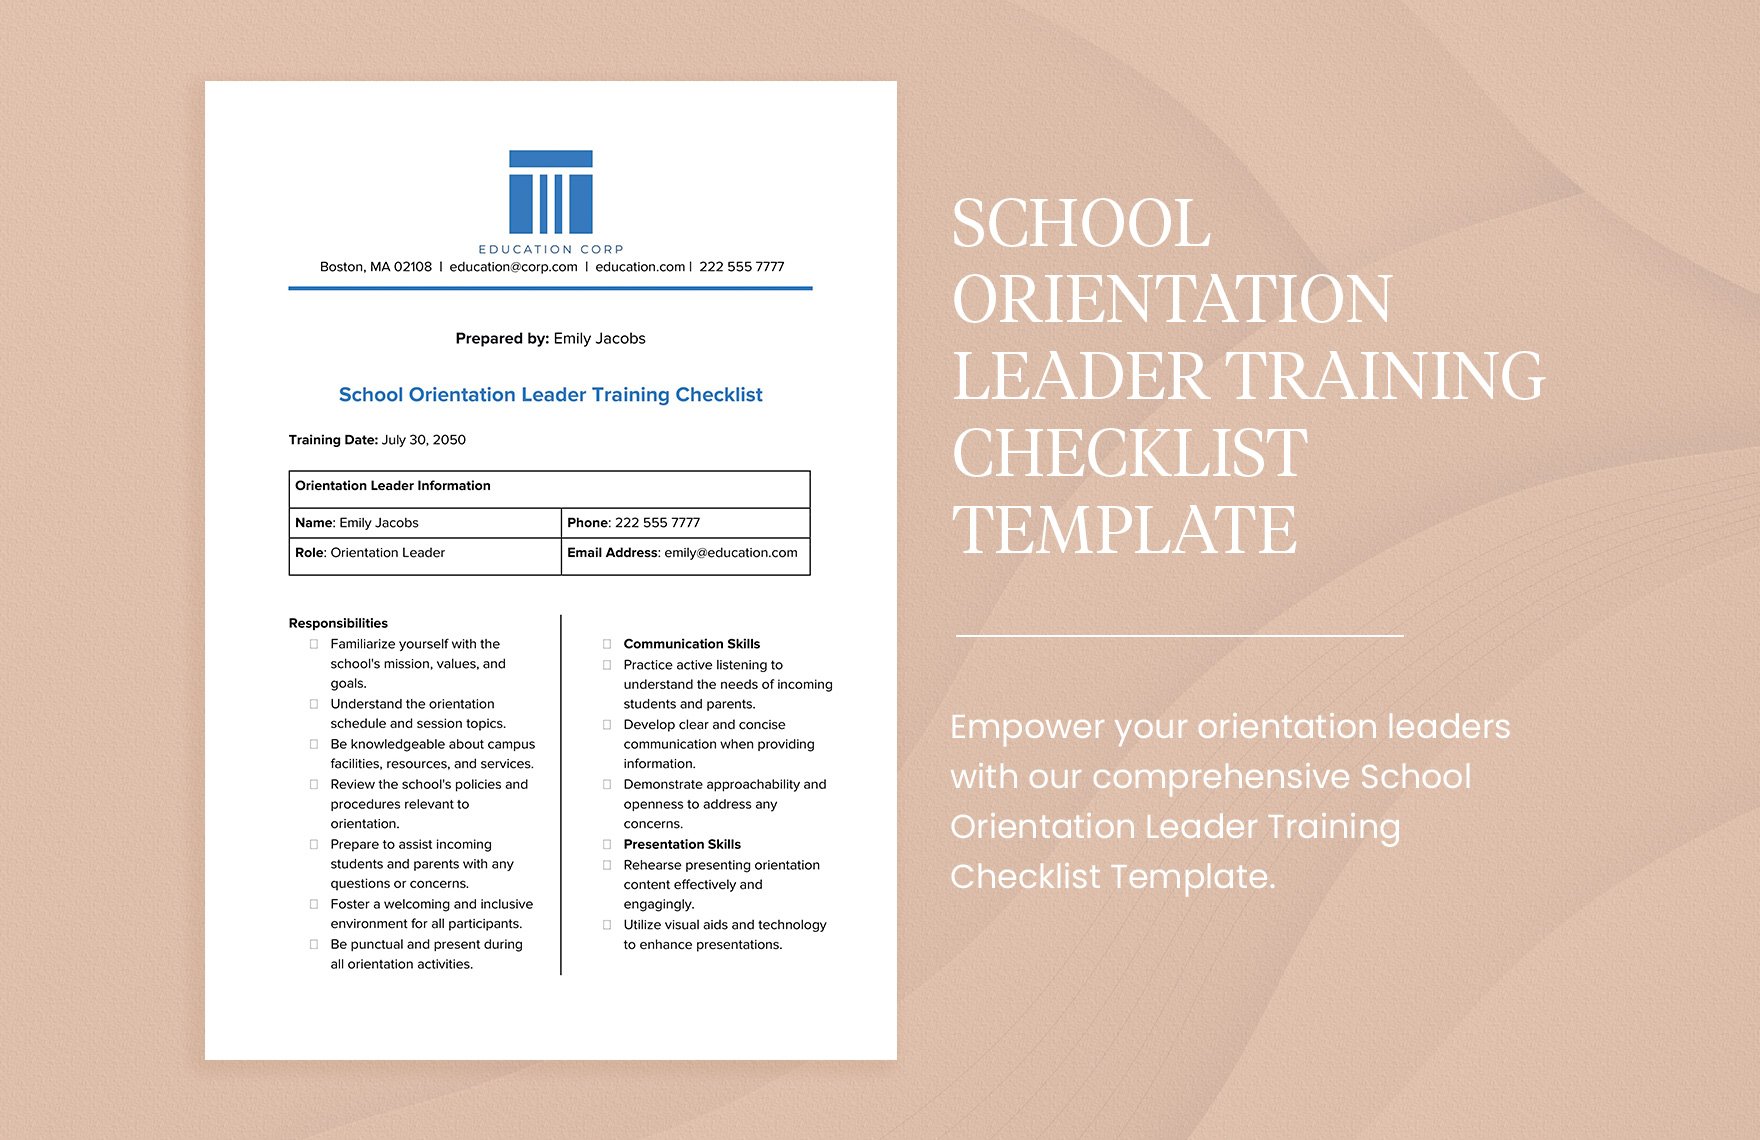 School Orientation Leader Training Checklist Template